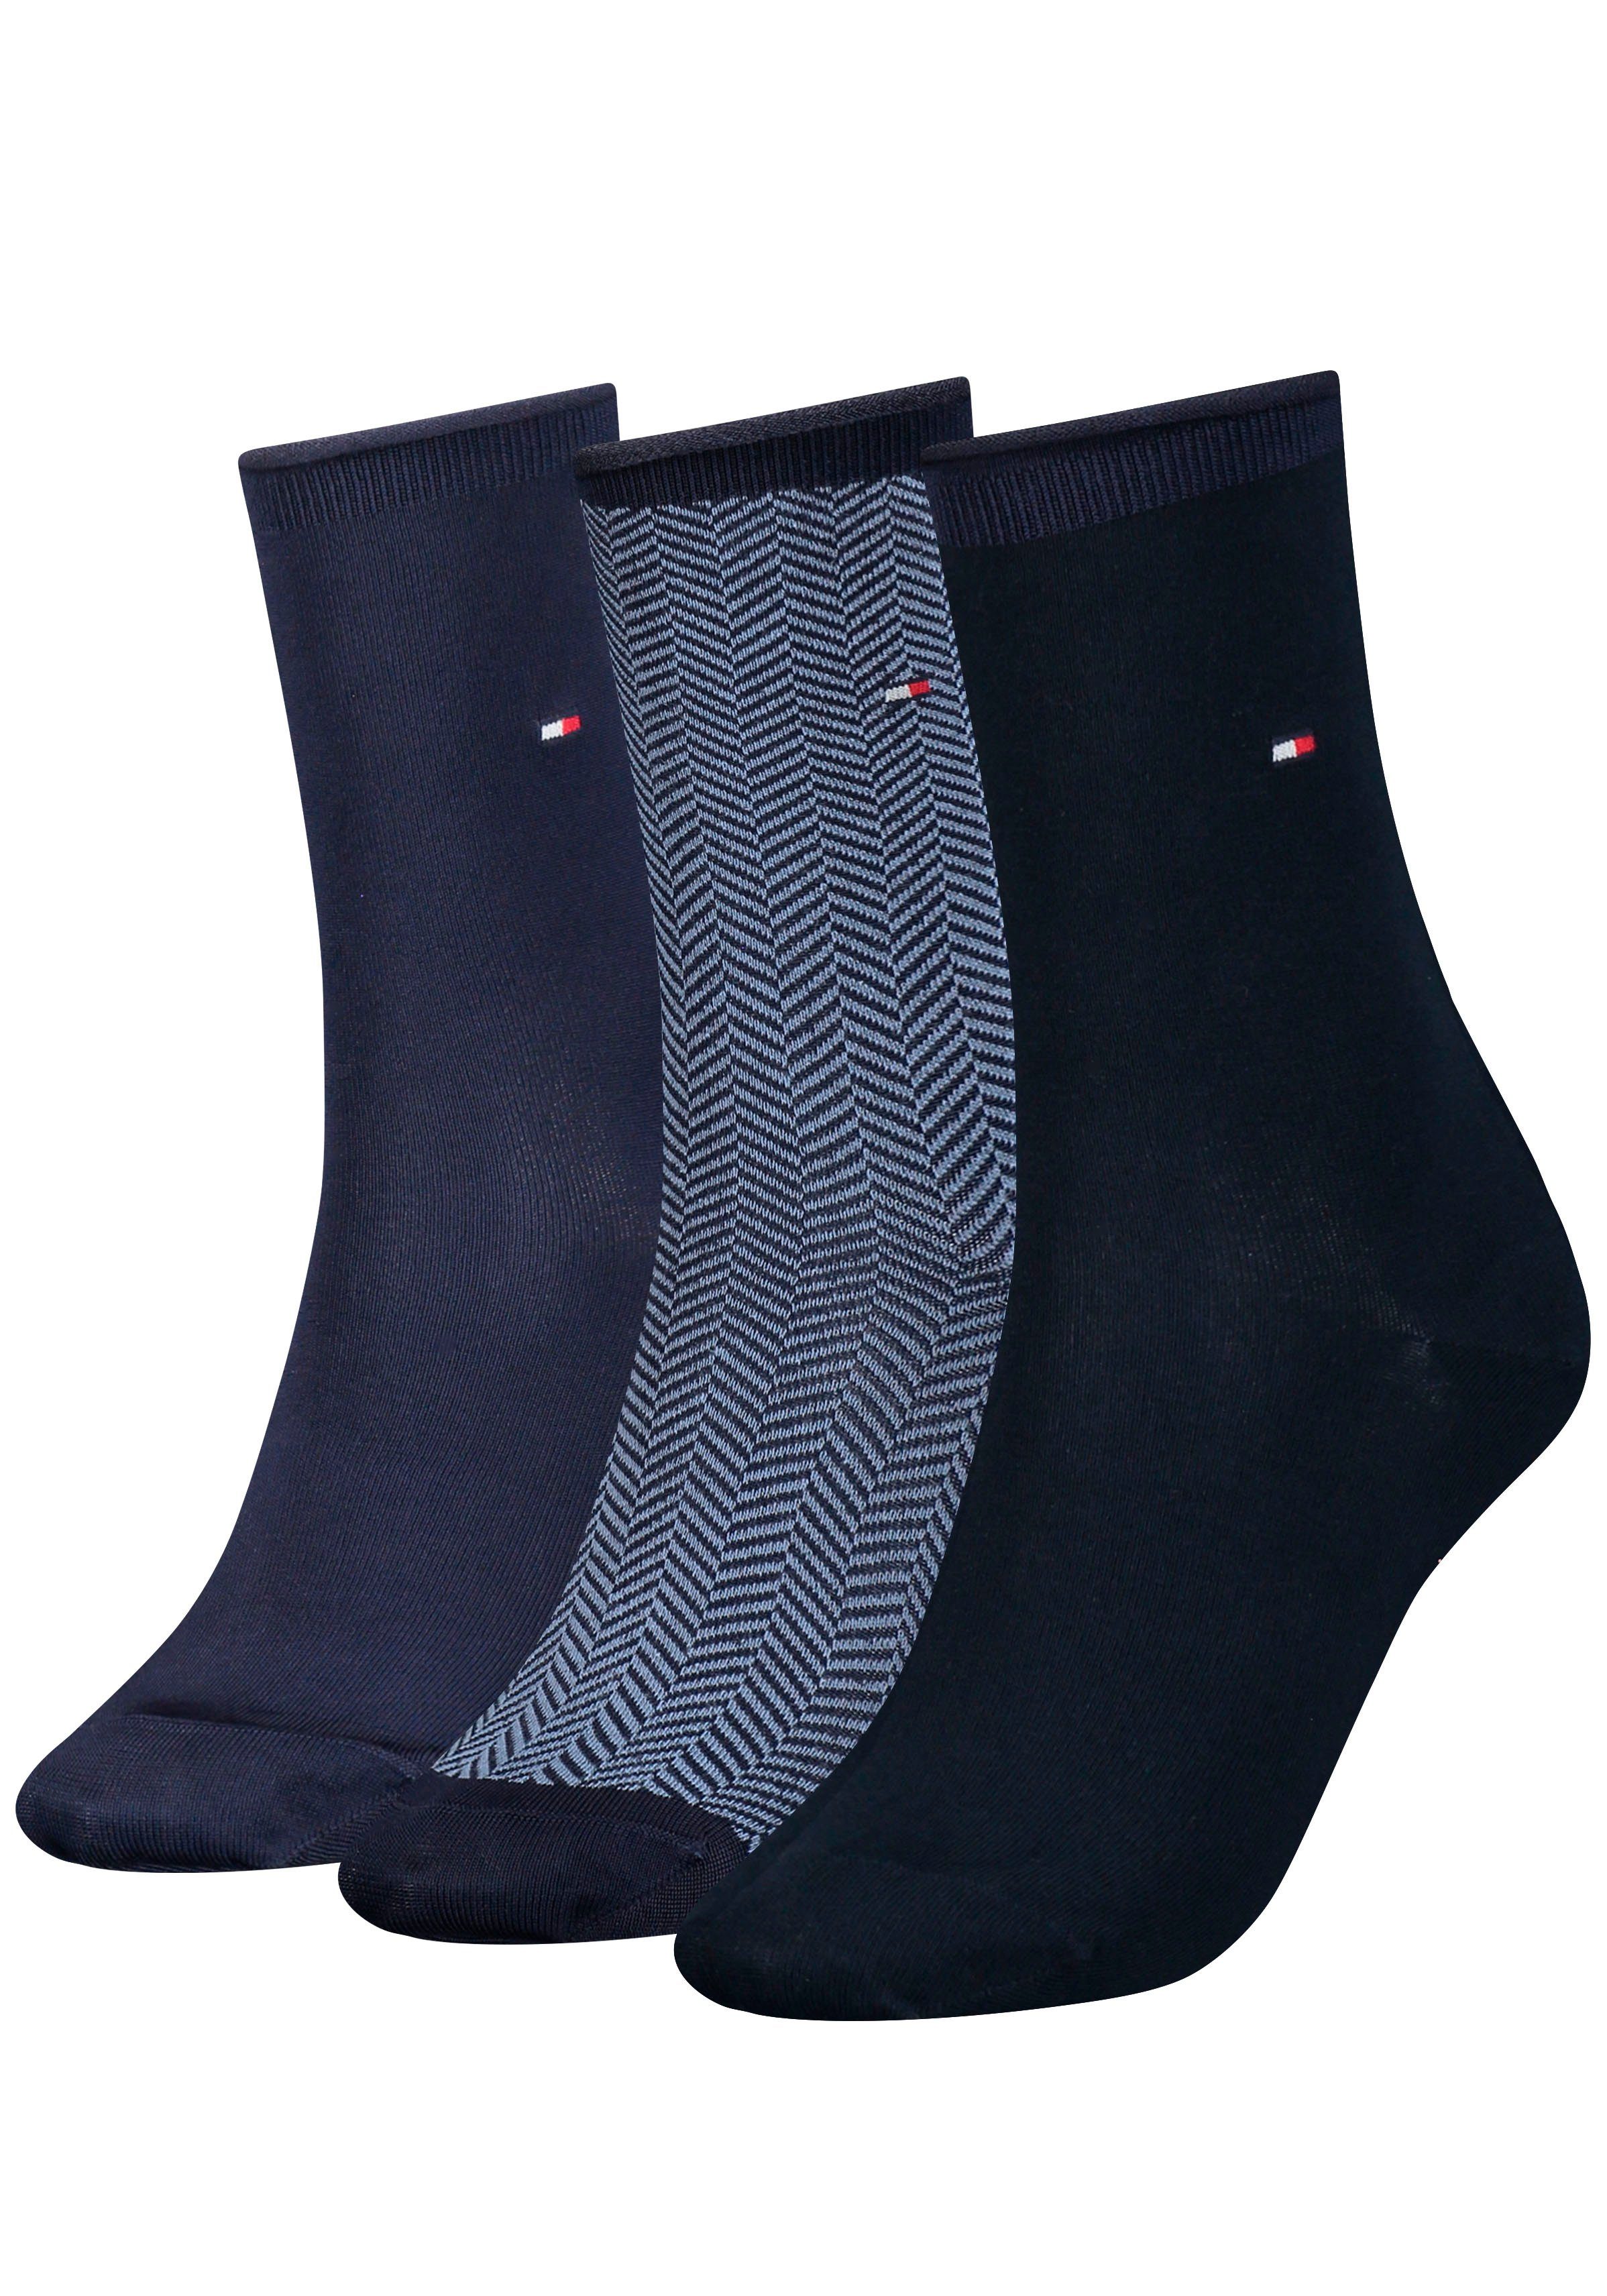 Tommy Hilfiger giftbox sokken set van 3 donkerblauw